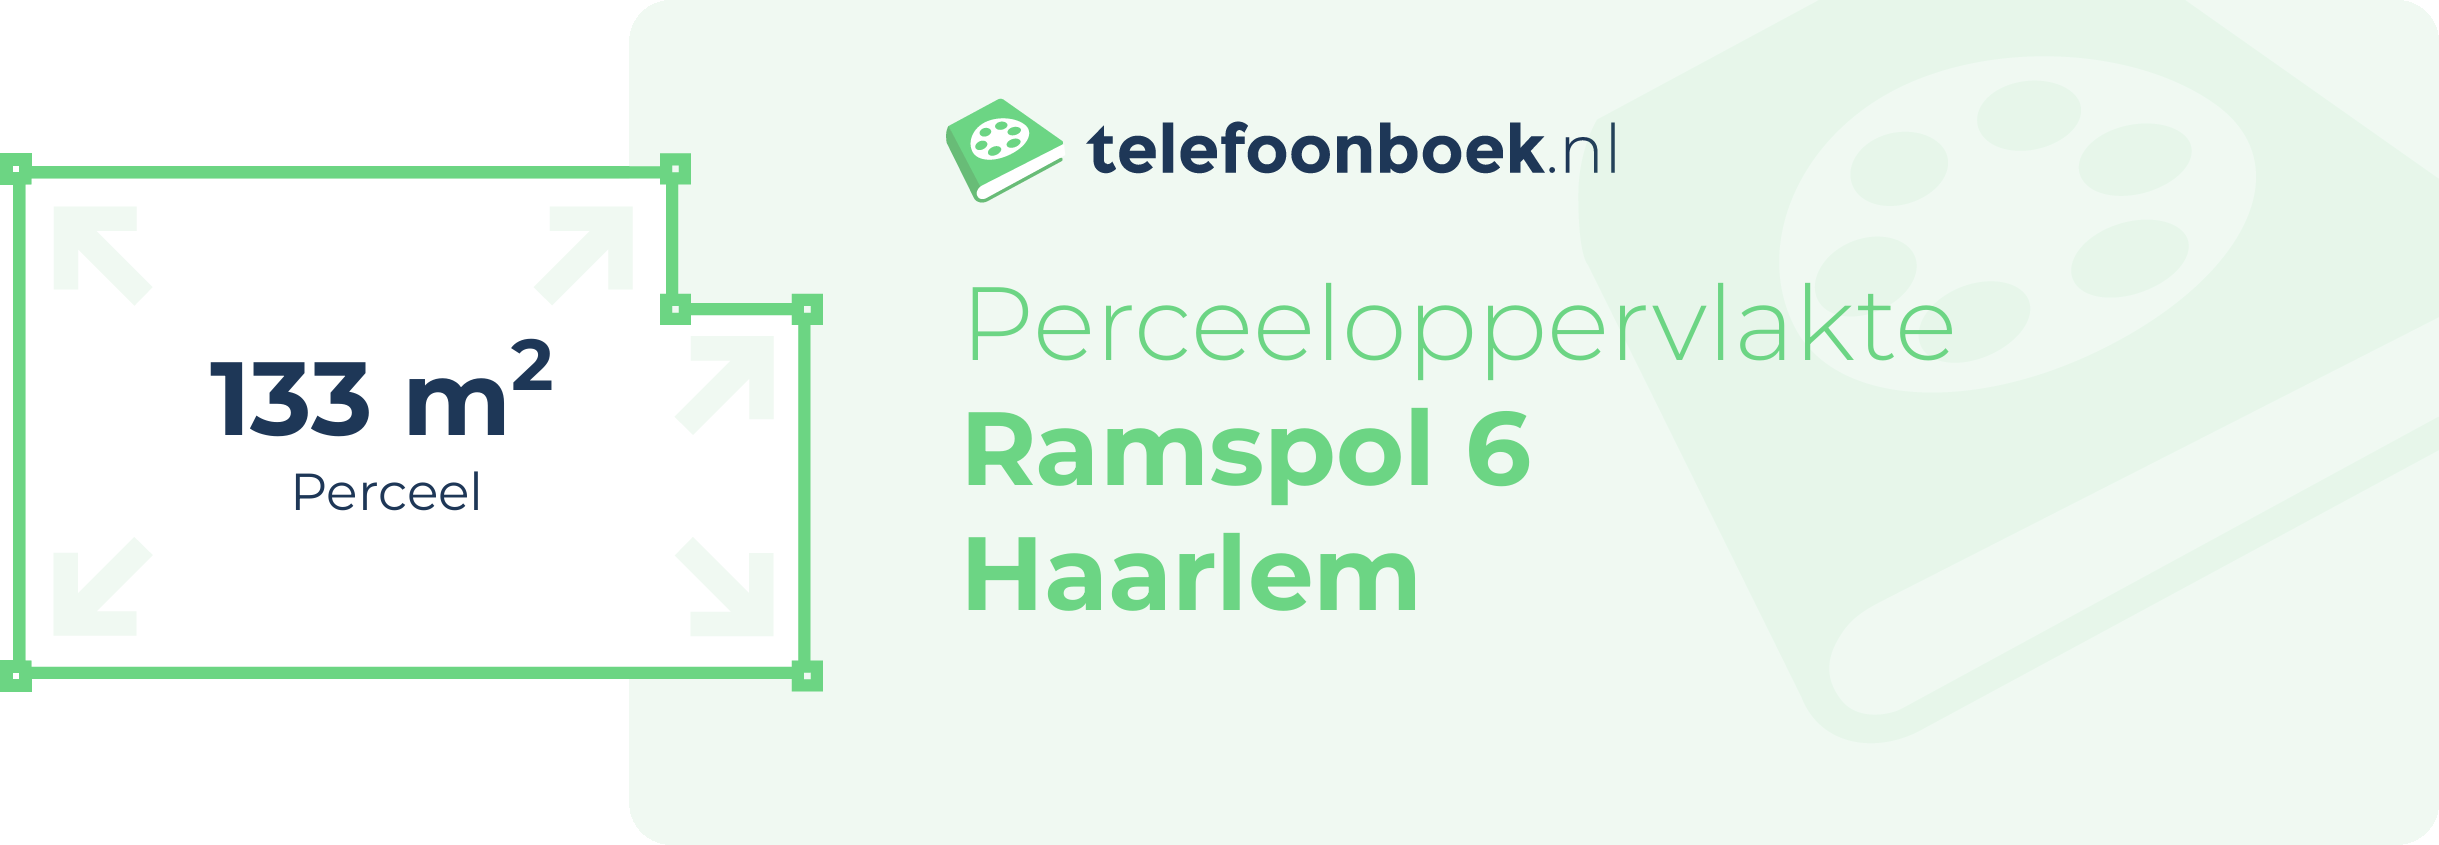 Perceeloppervlakte Ramspol 6 Haarlem